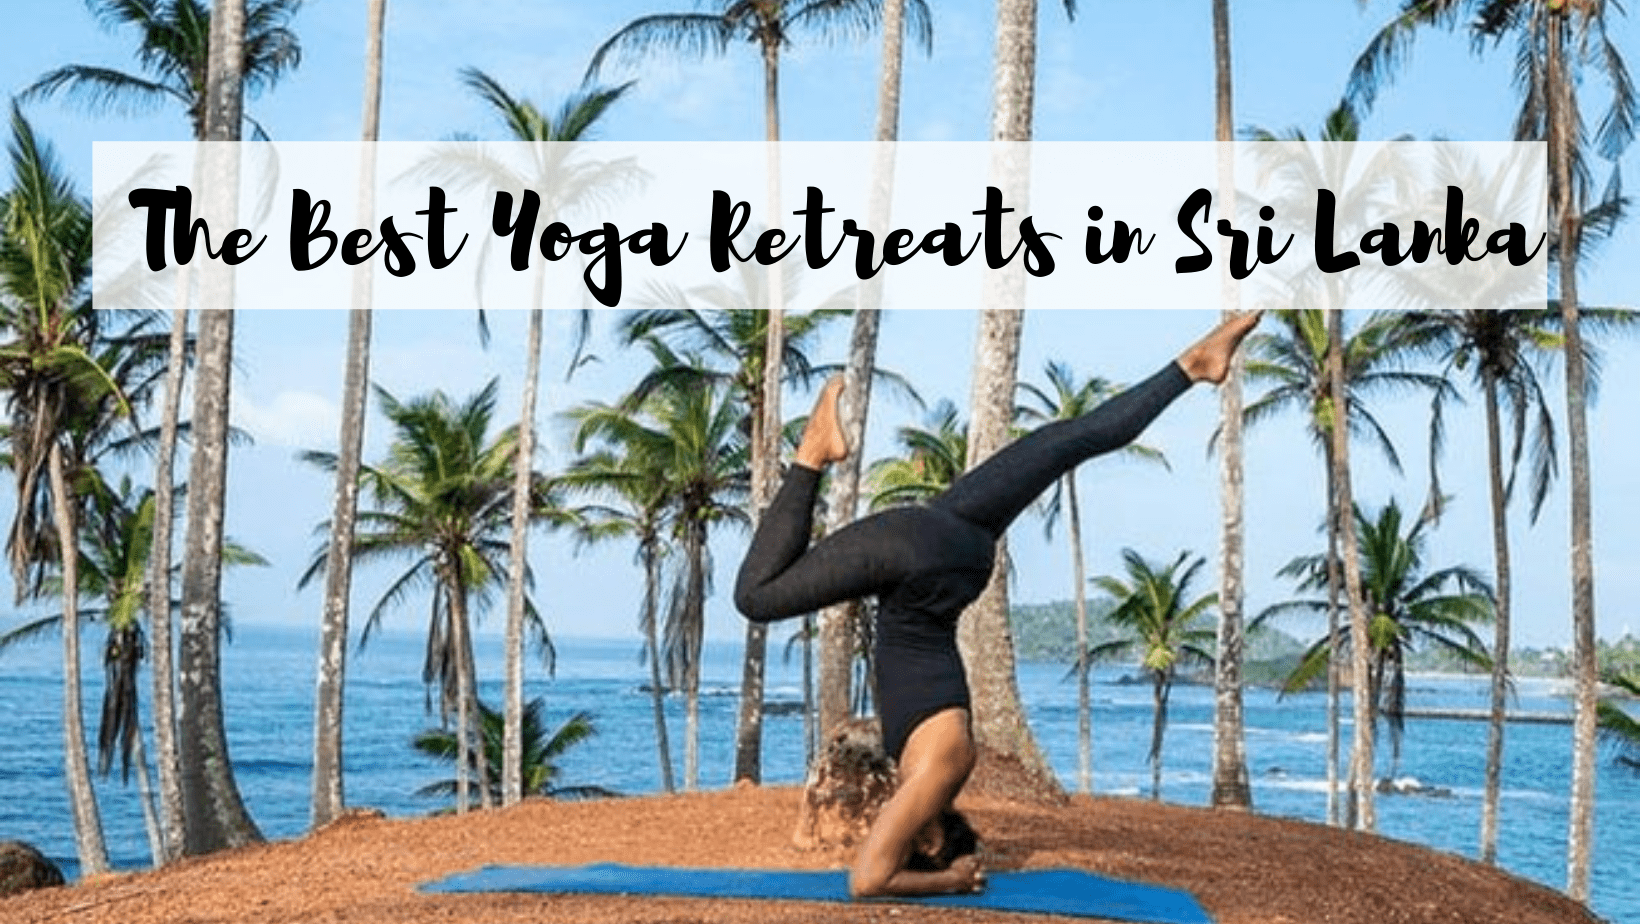 The best yoga retreats in Sri Lanka